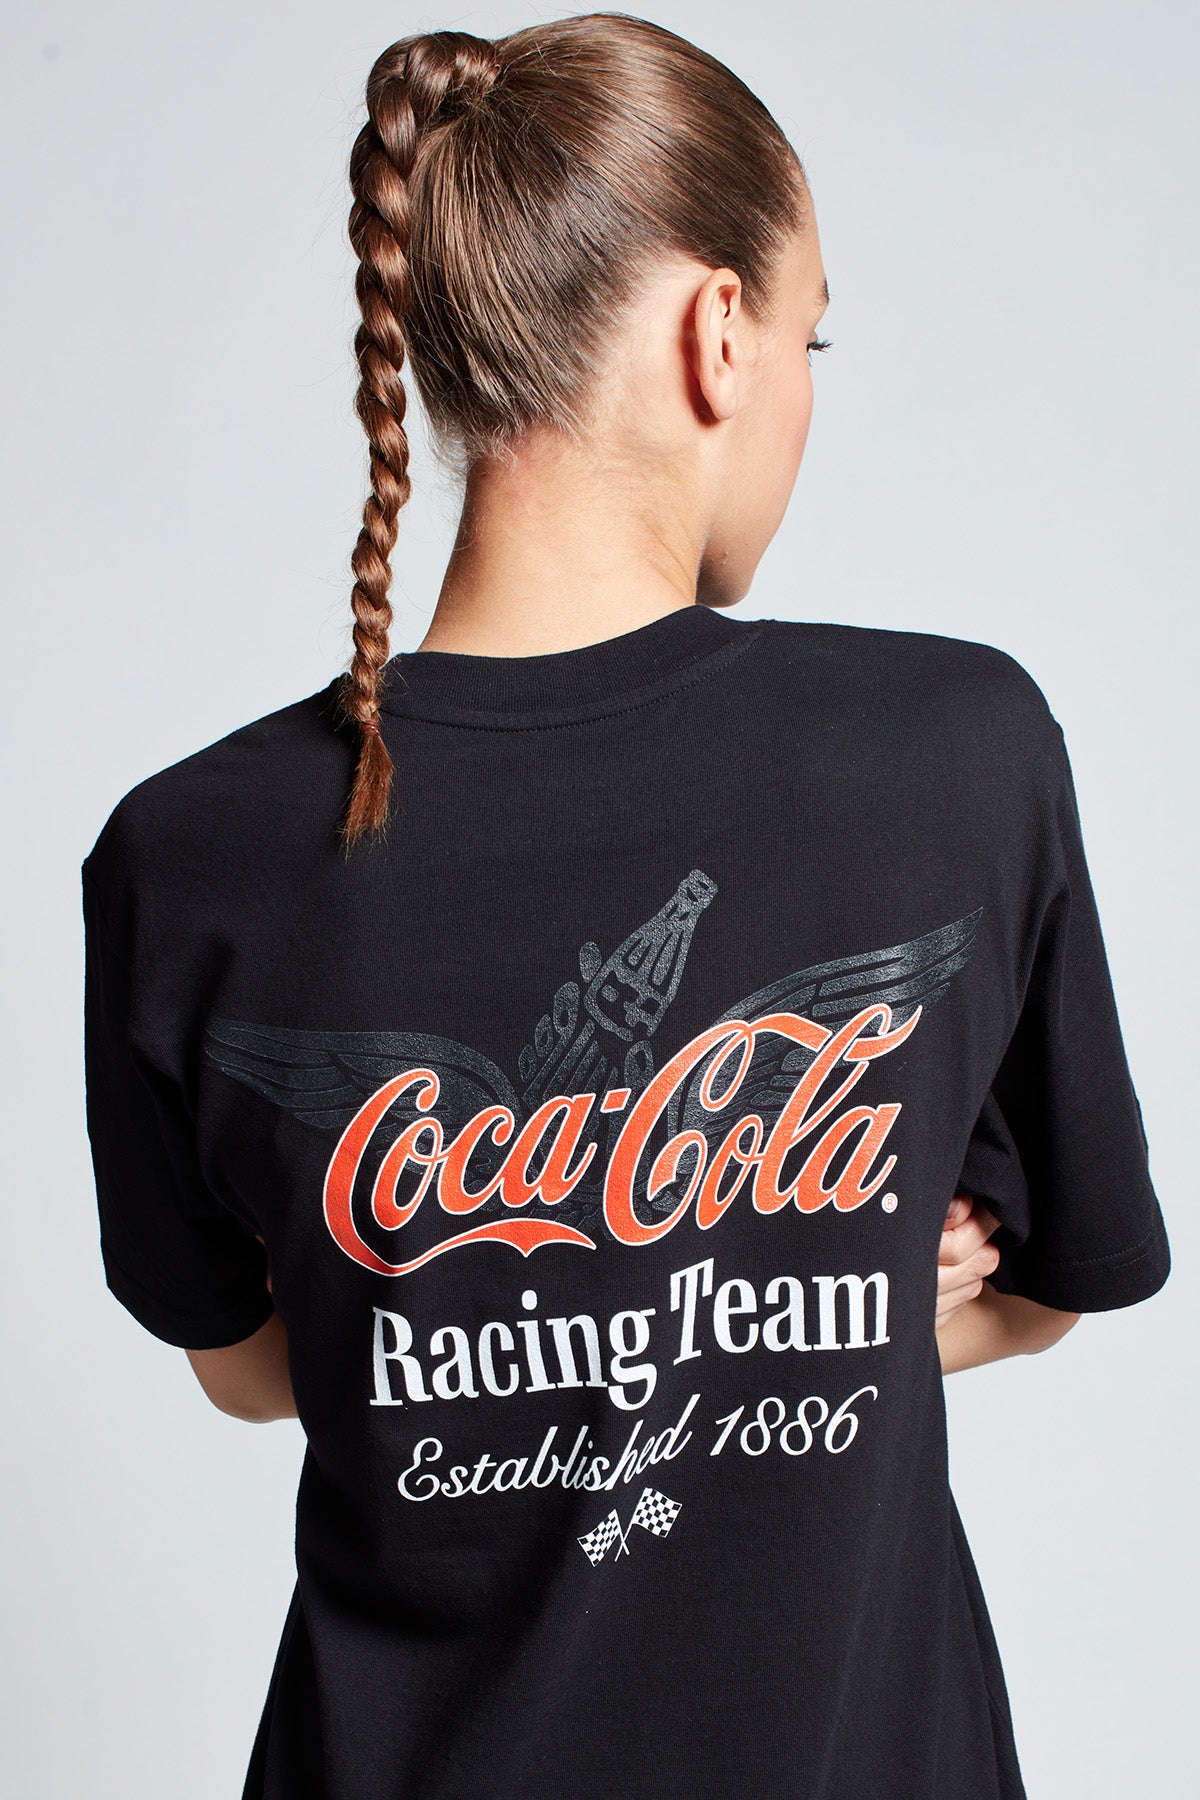 Coca-Cola Racing Team T-shirt in Black